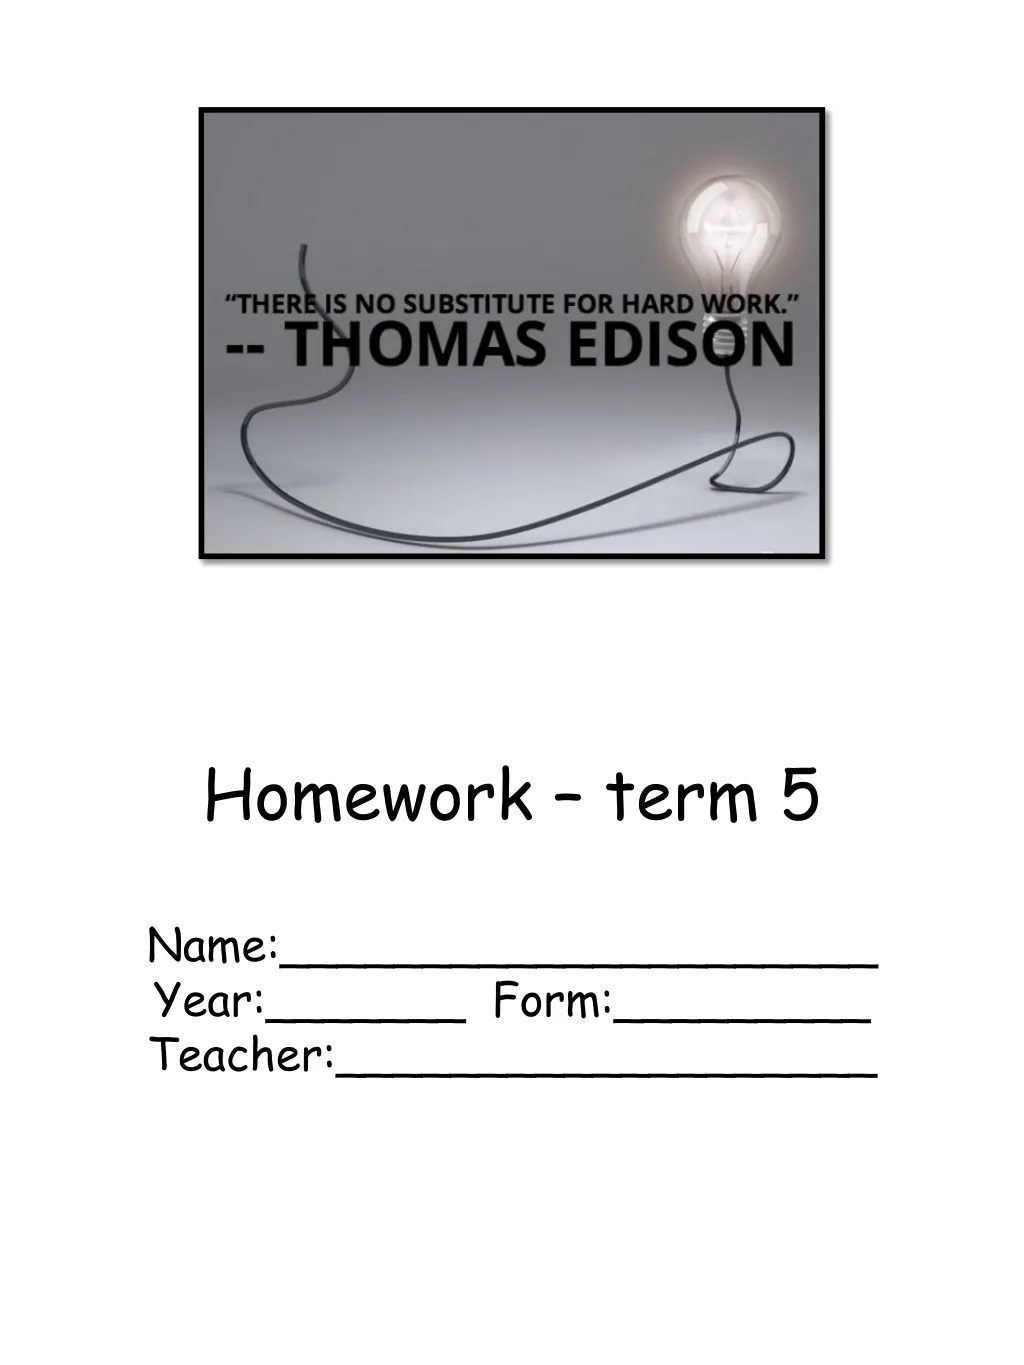 homework term 5 name year form teacher